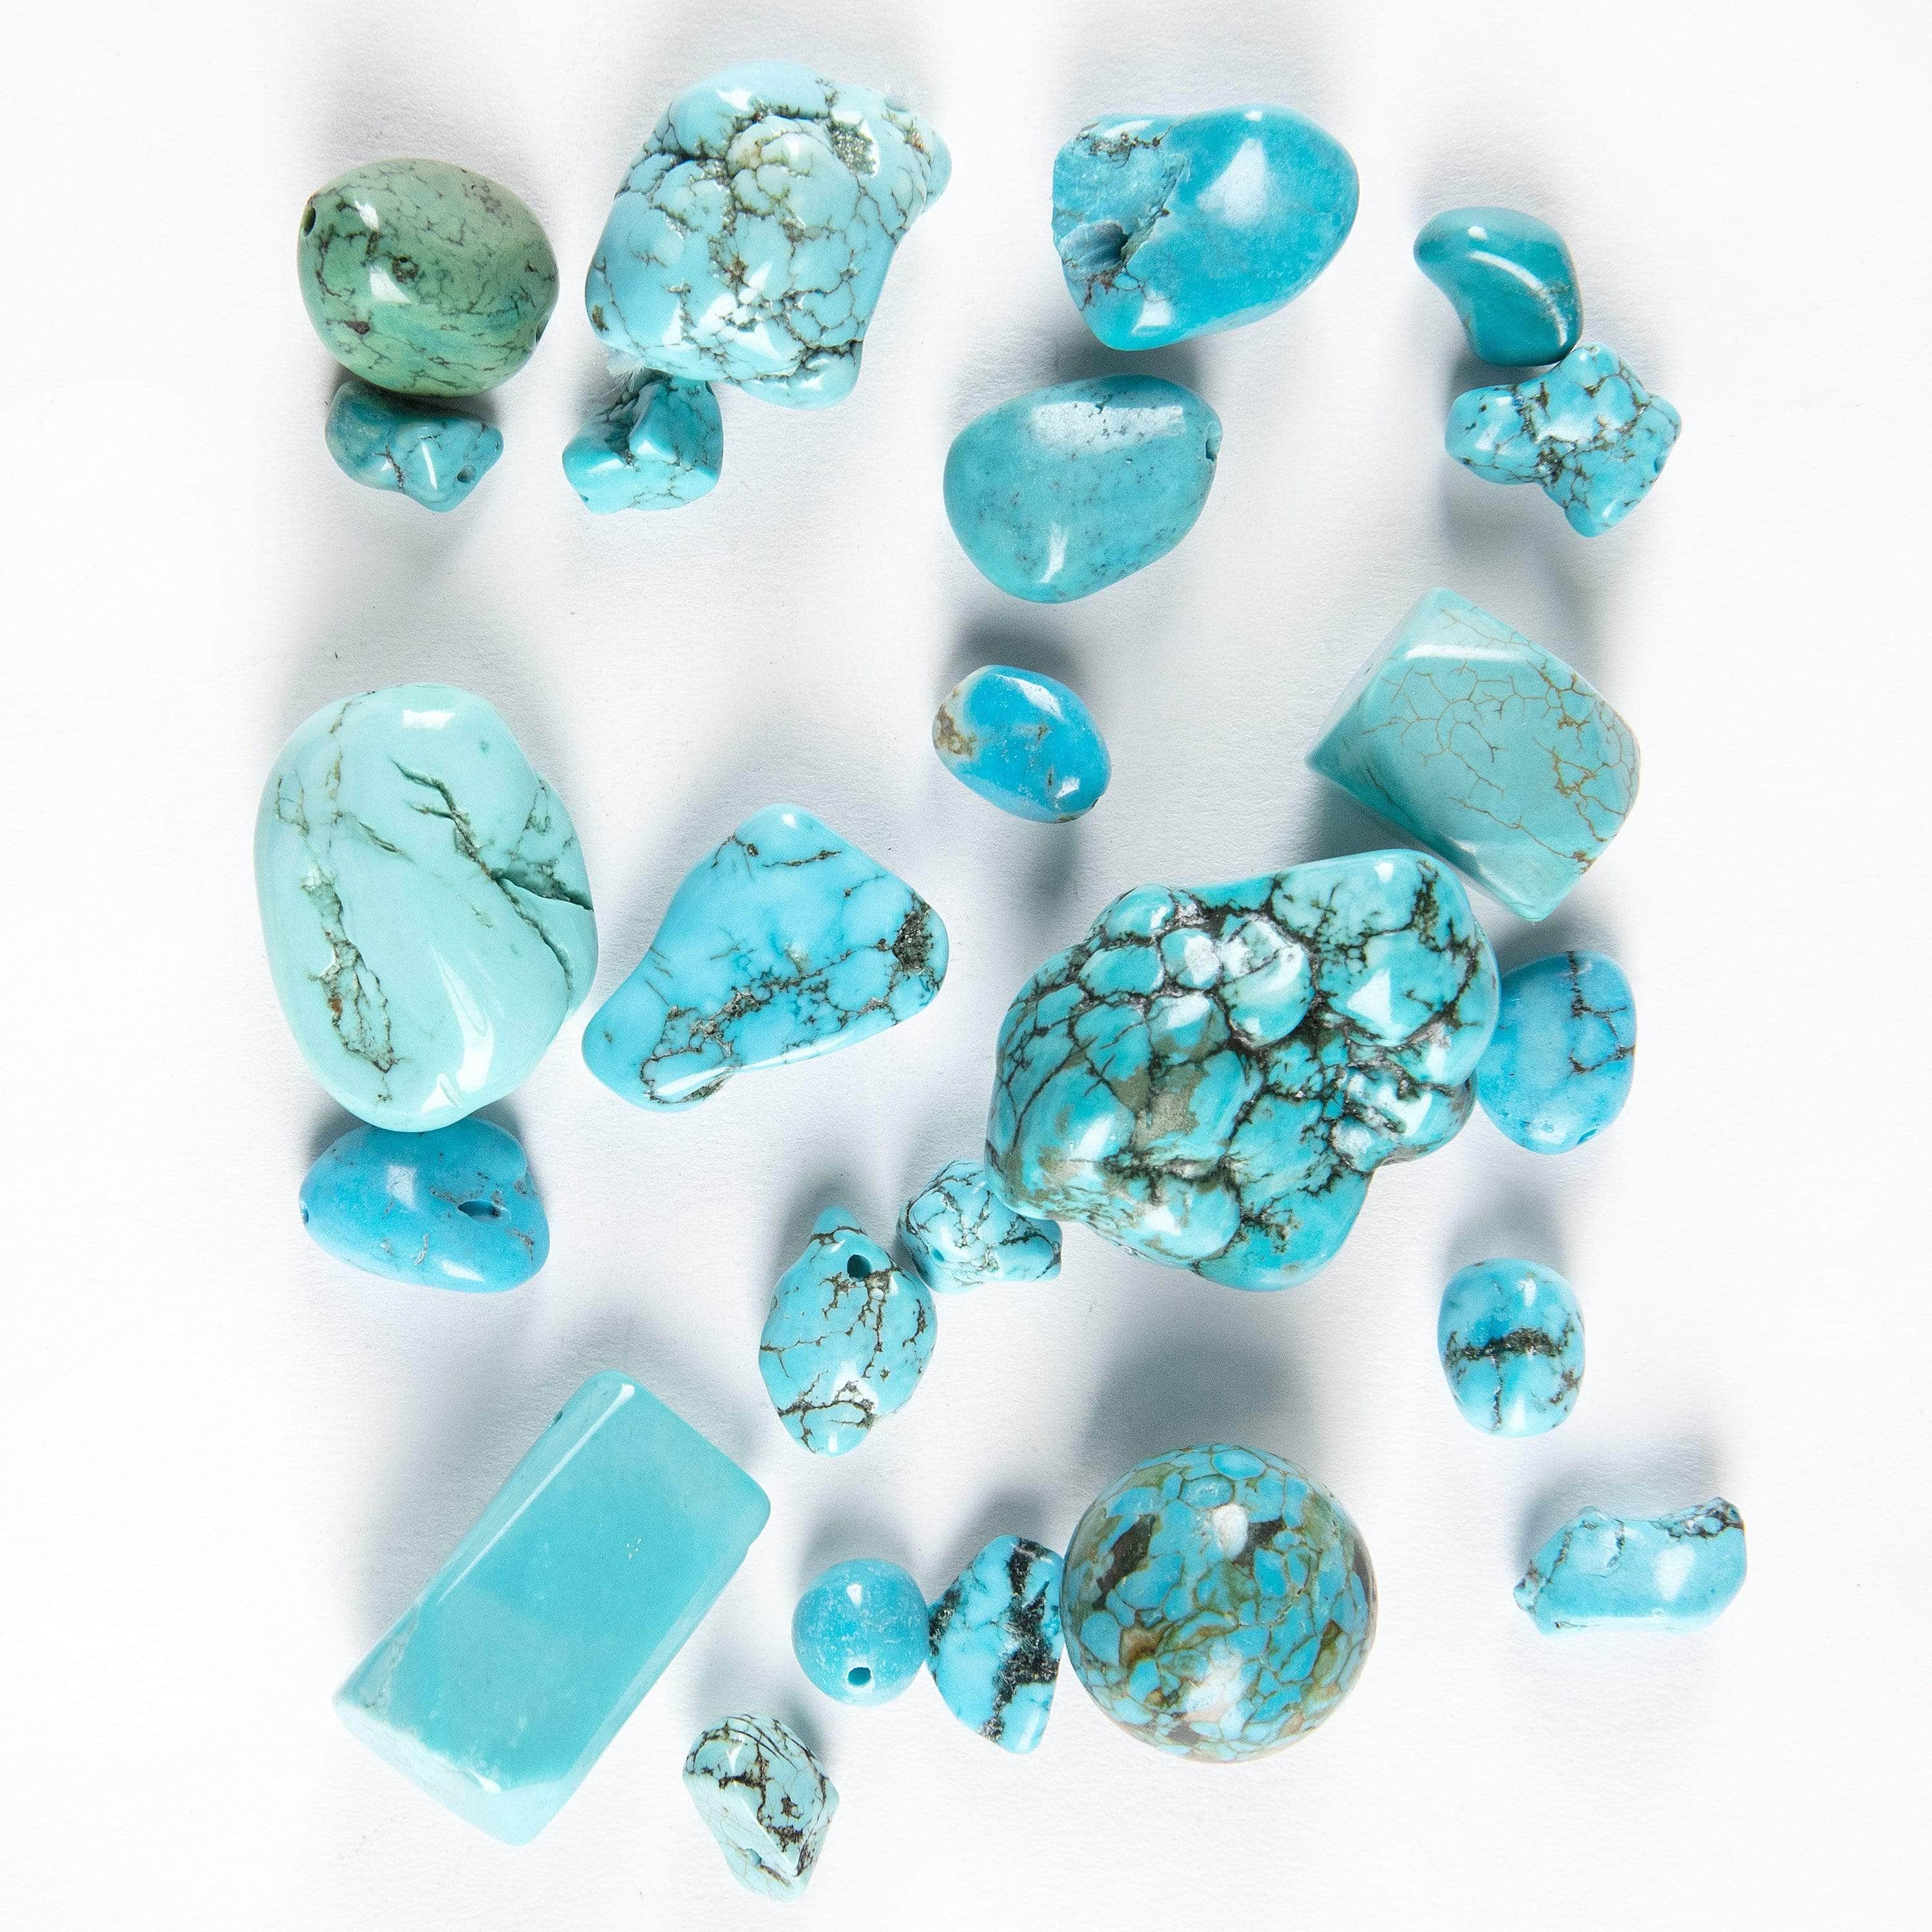 Kalifano Fossils & Minerals Howlite Turquoise Mixed Gemstone Bag 500TQ